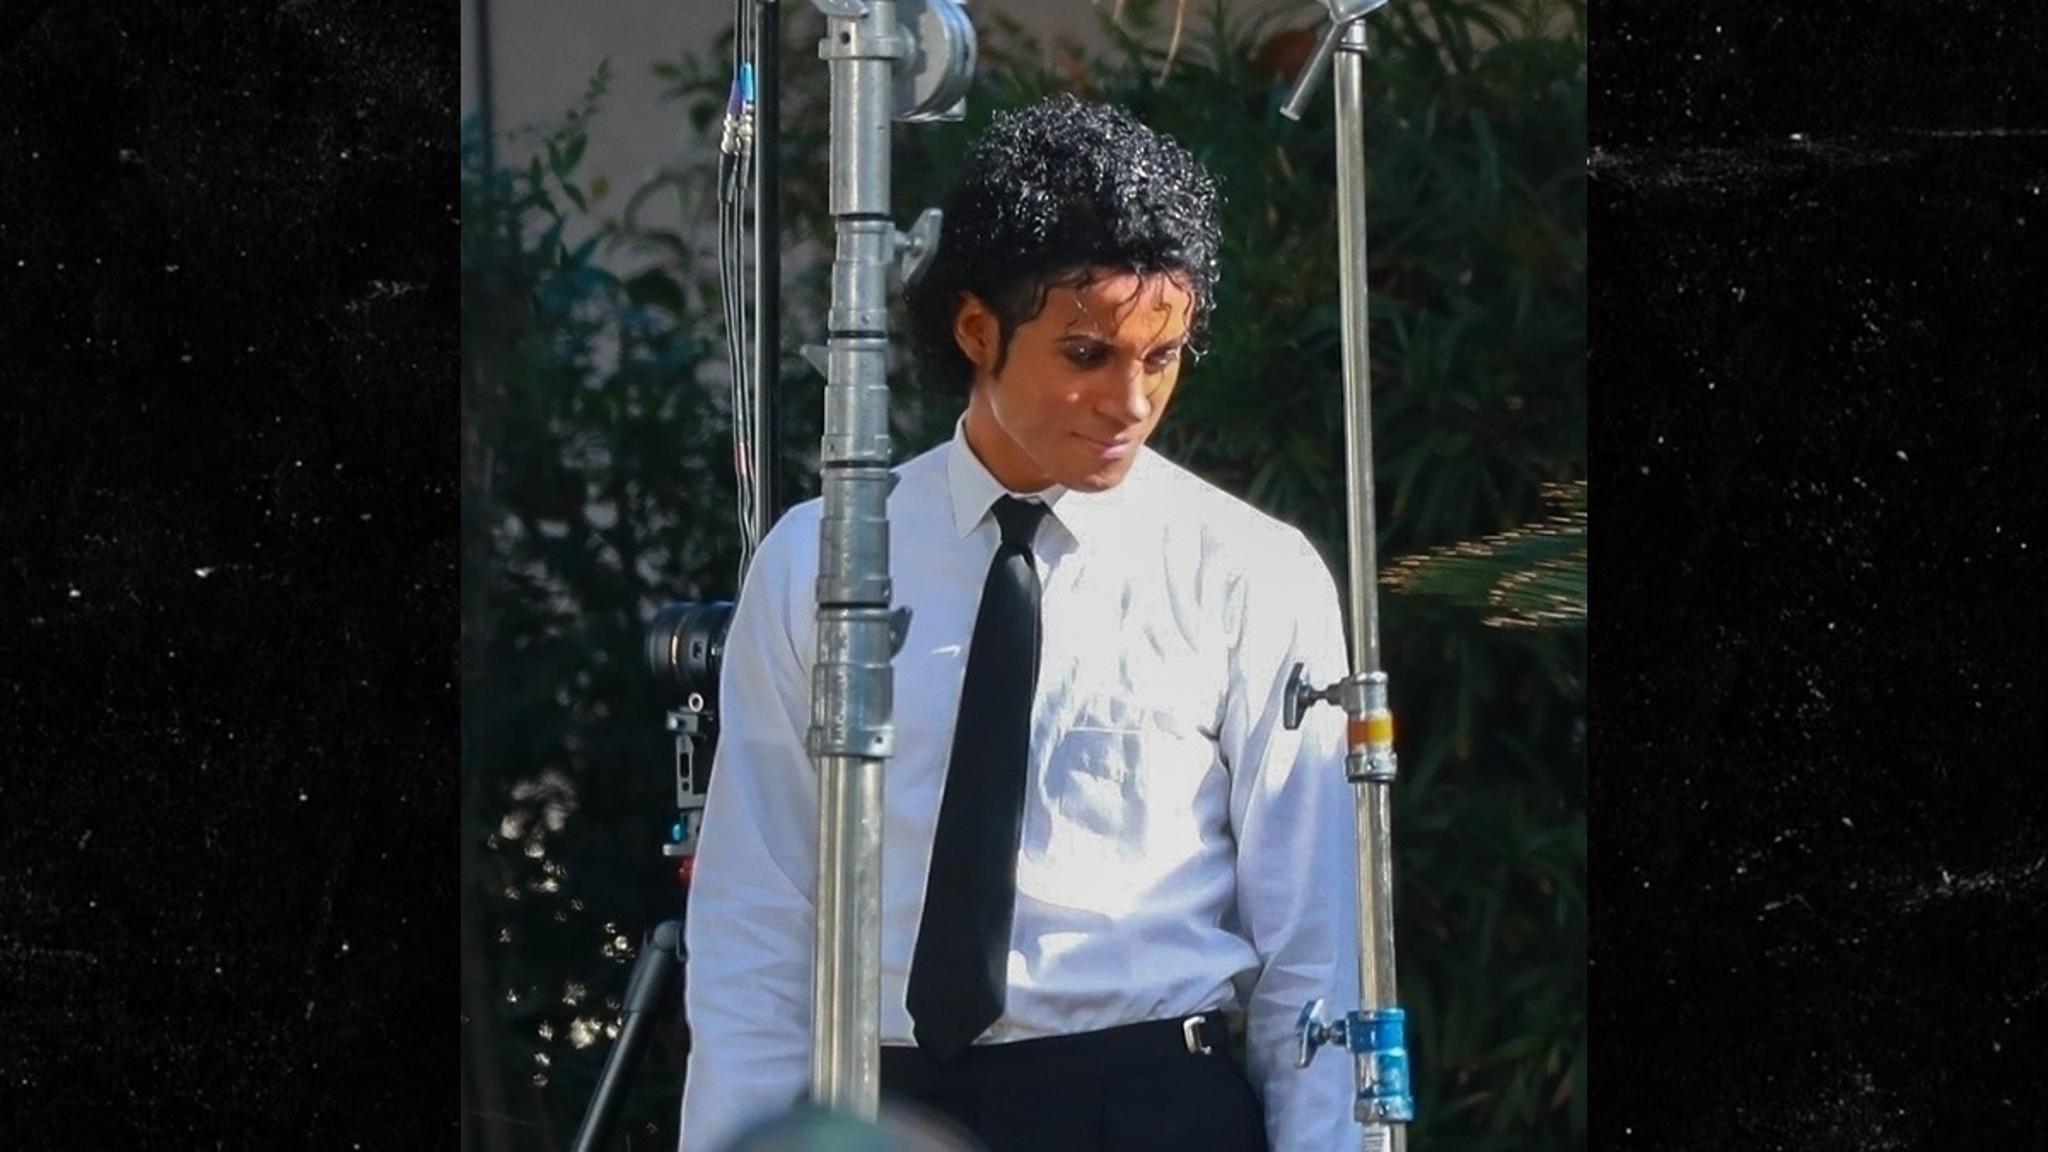 Michael Jackson’s Nephew Jaafar In Full Costume As King of Pop On Biopic Set